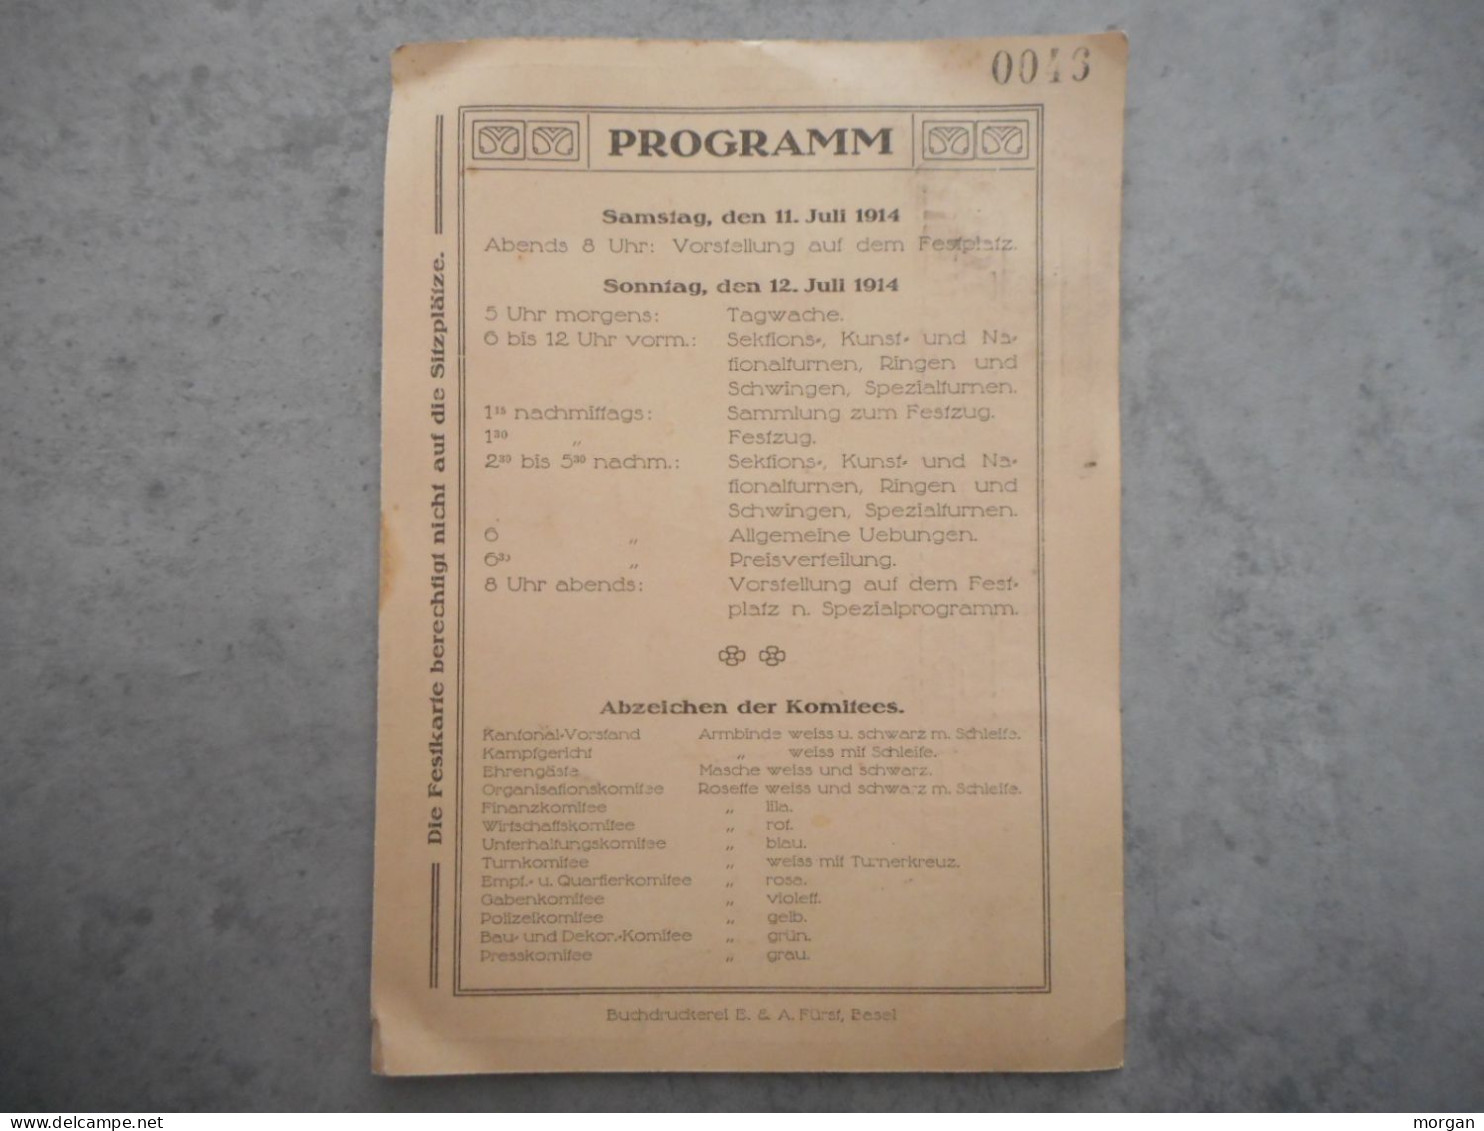 SUISSE, BALE, BASEL, 1914, PROGRAMME BASELSTADTISCHES KANTONALTURNFEST, BASEL HORBURG JULI 1914, FESTKARTE - Plakate